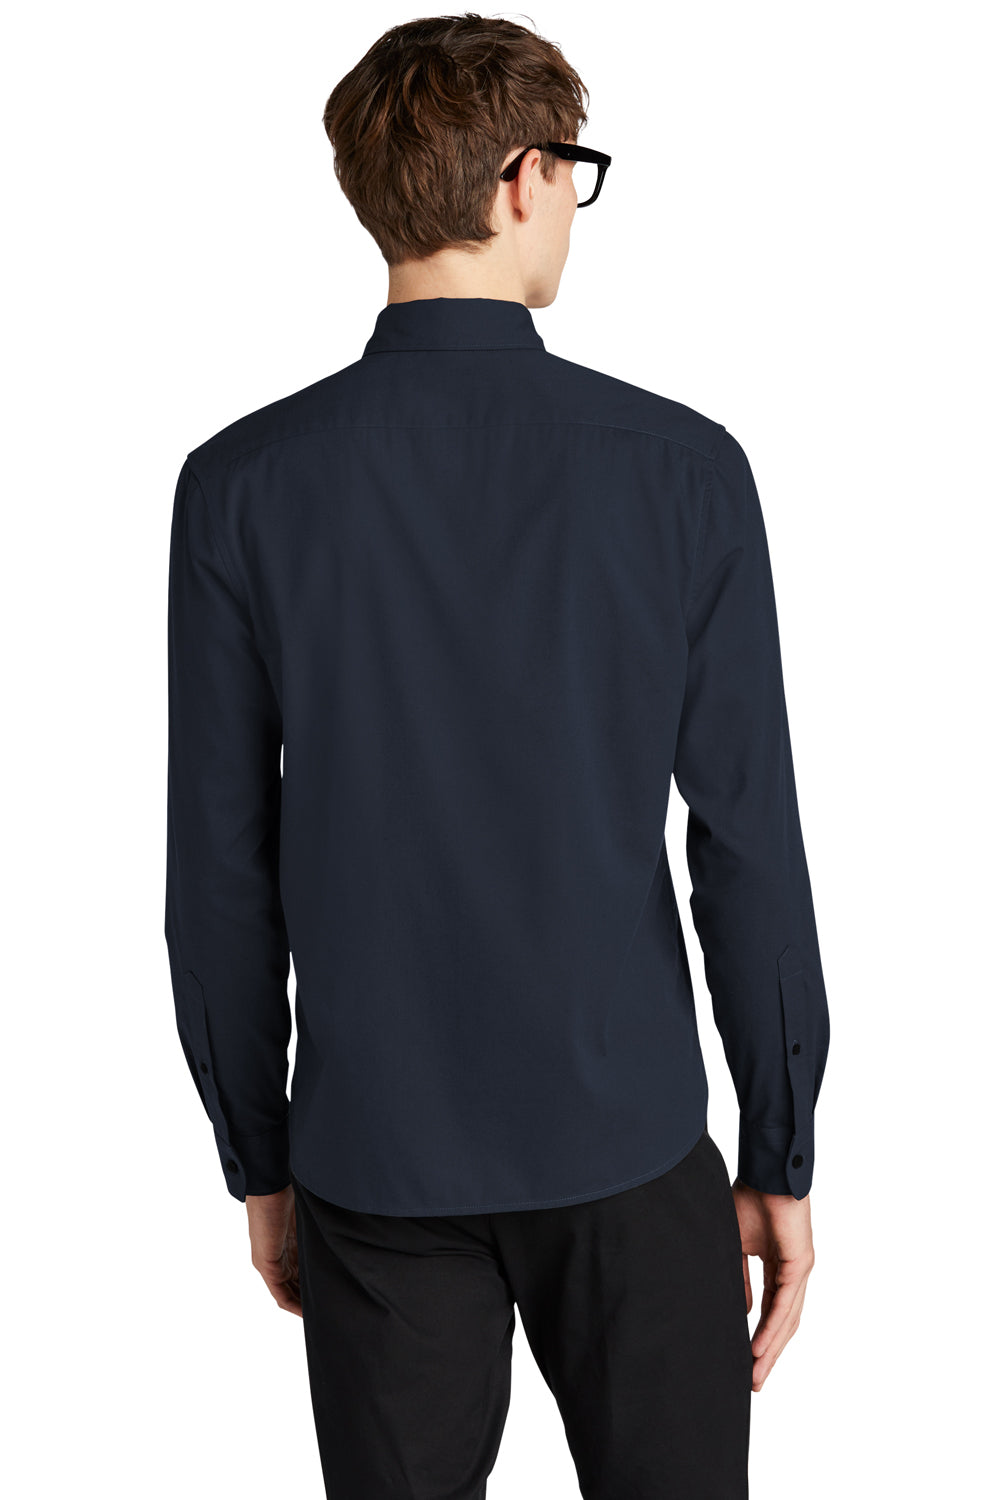 Mercer+Mettle MM2000 Stretch Woven Long Sleeve Button Down Shirt Night Navy Blue Back